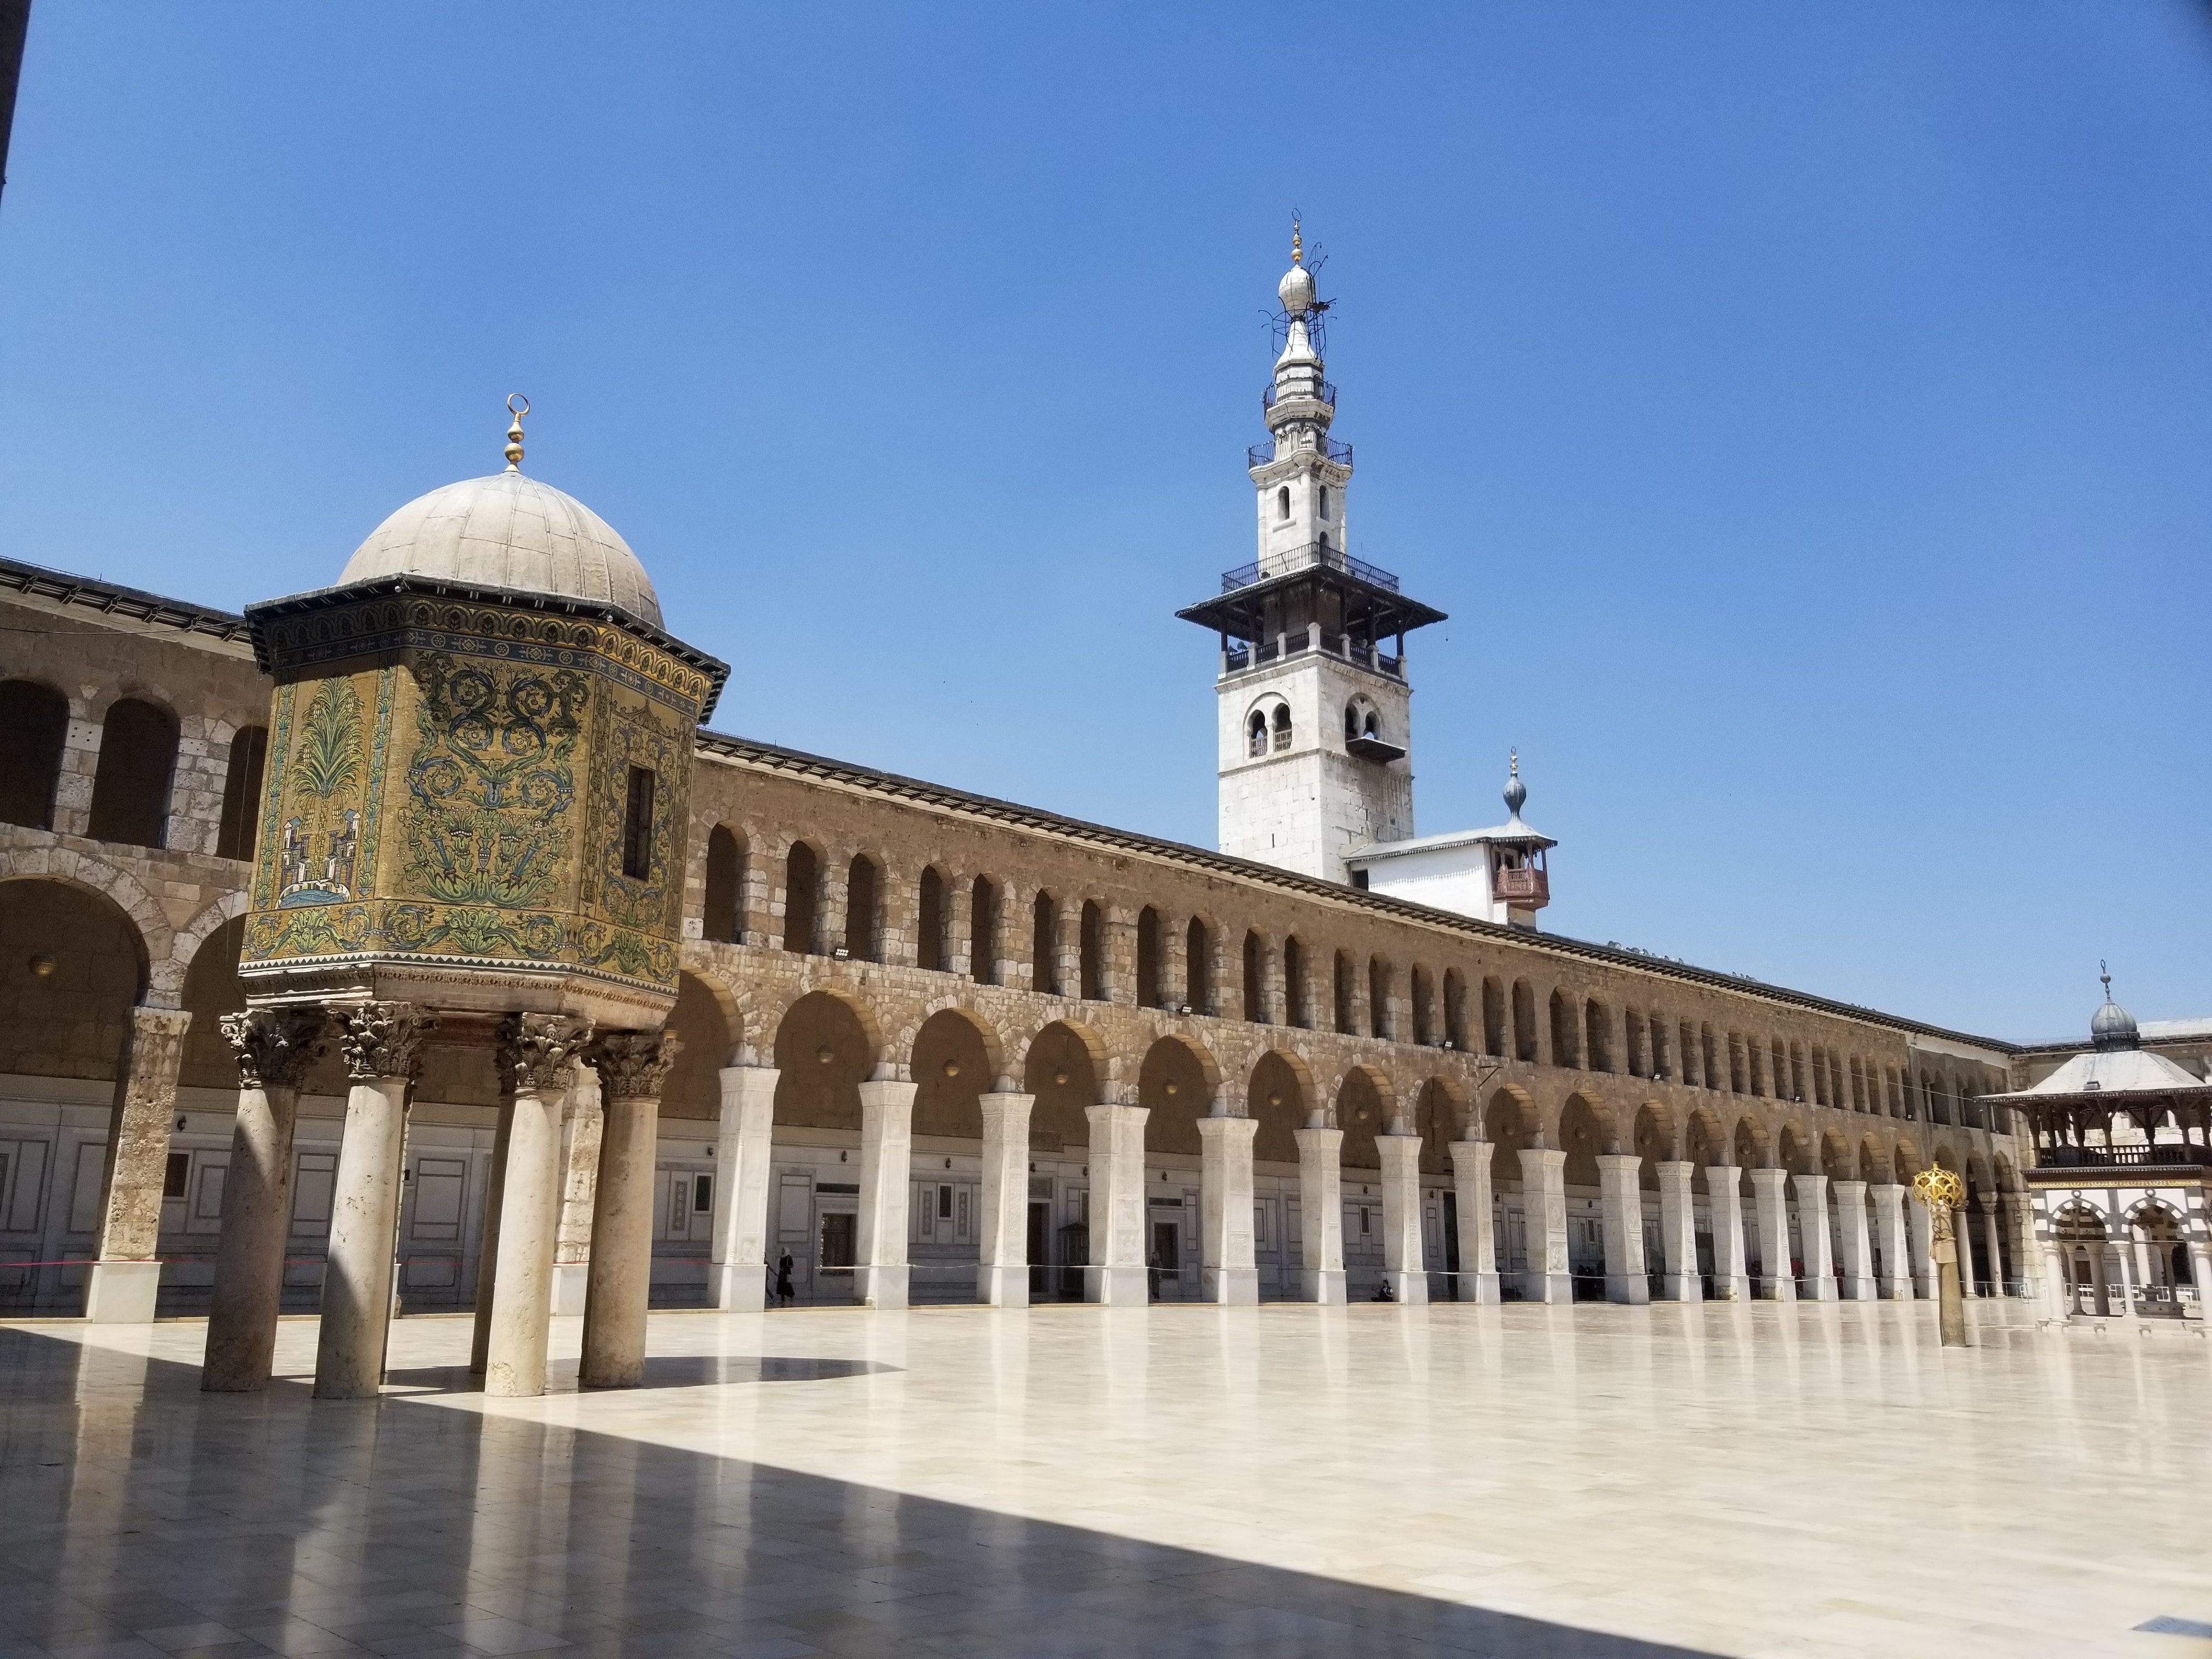 The Umayyad Mosque in Damascus. Photo by T Foz on Unsplash.